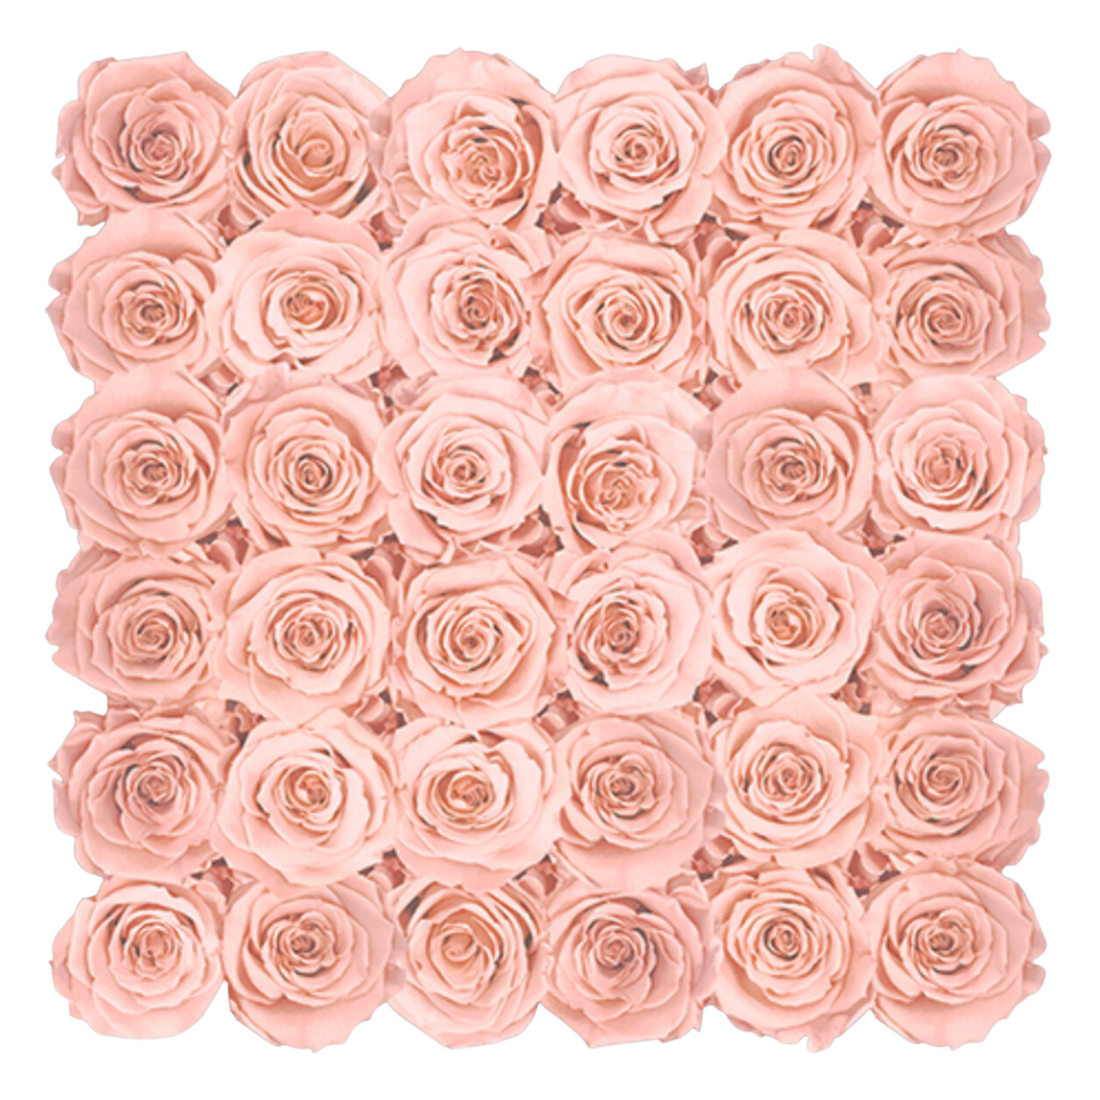 Grande Square - Blush Velvet by La Fleur Lifetime Flowers